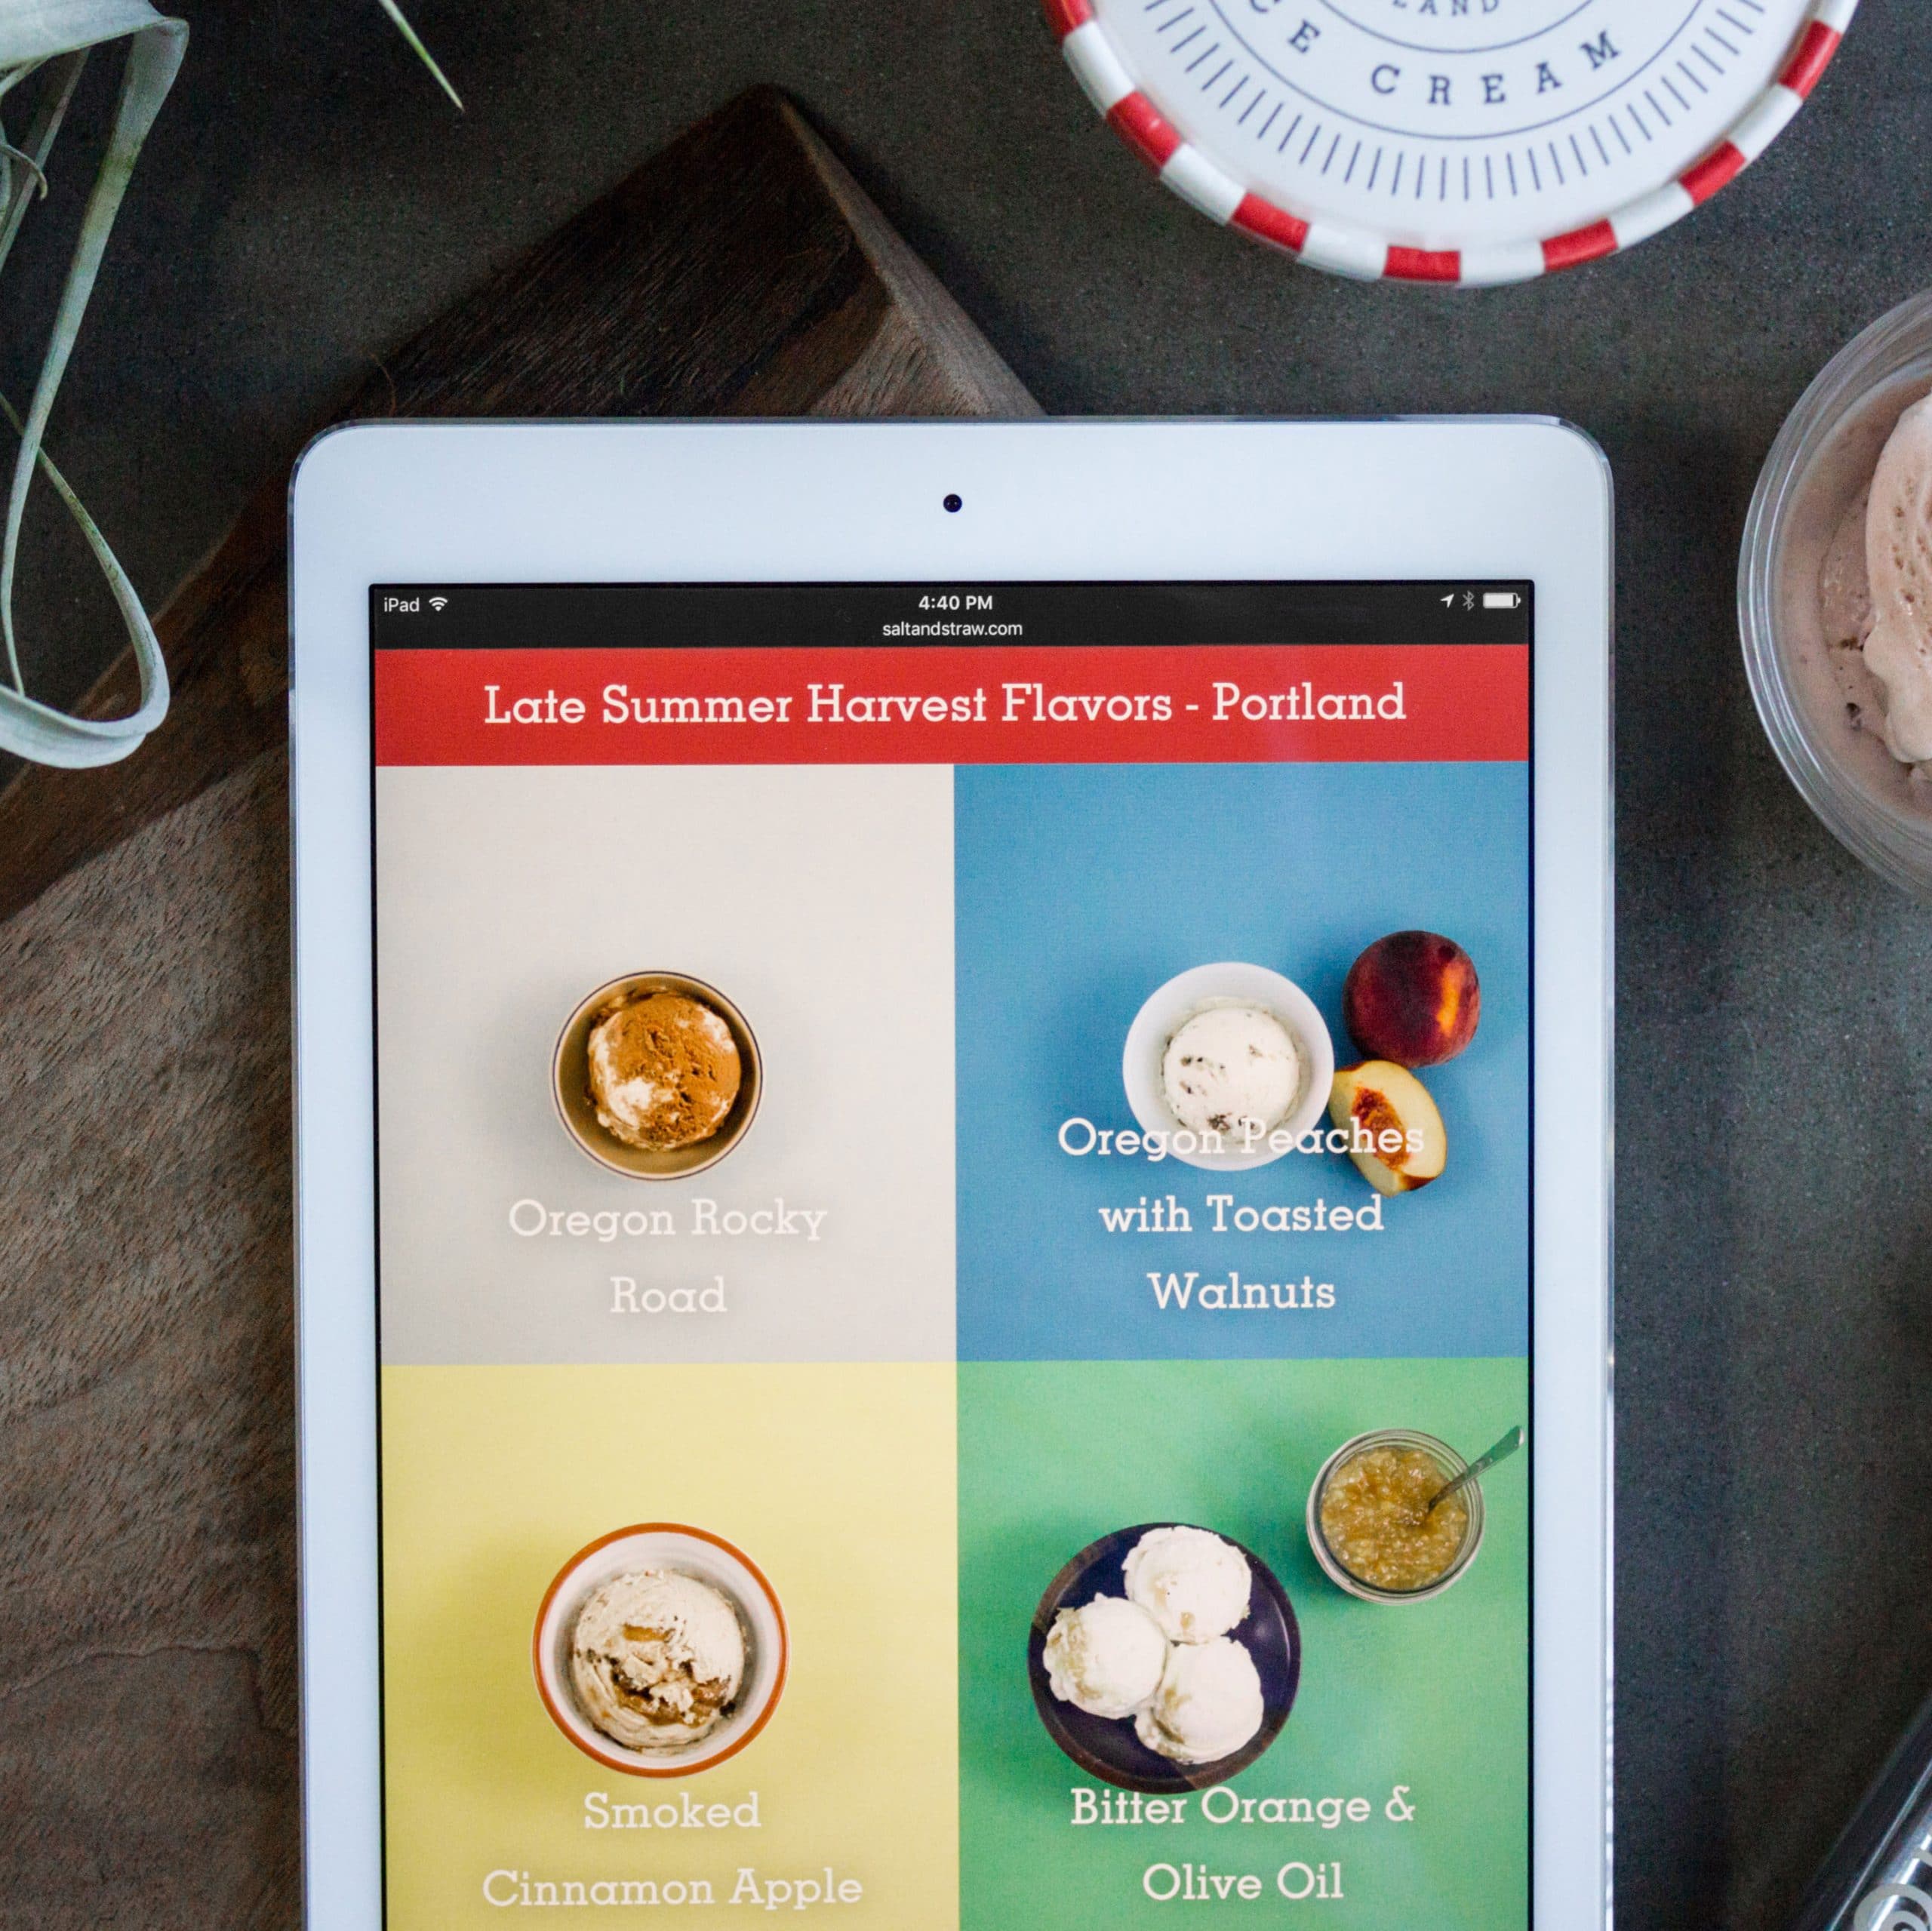 Salt & Straw flavors on iPad